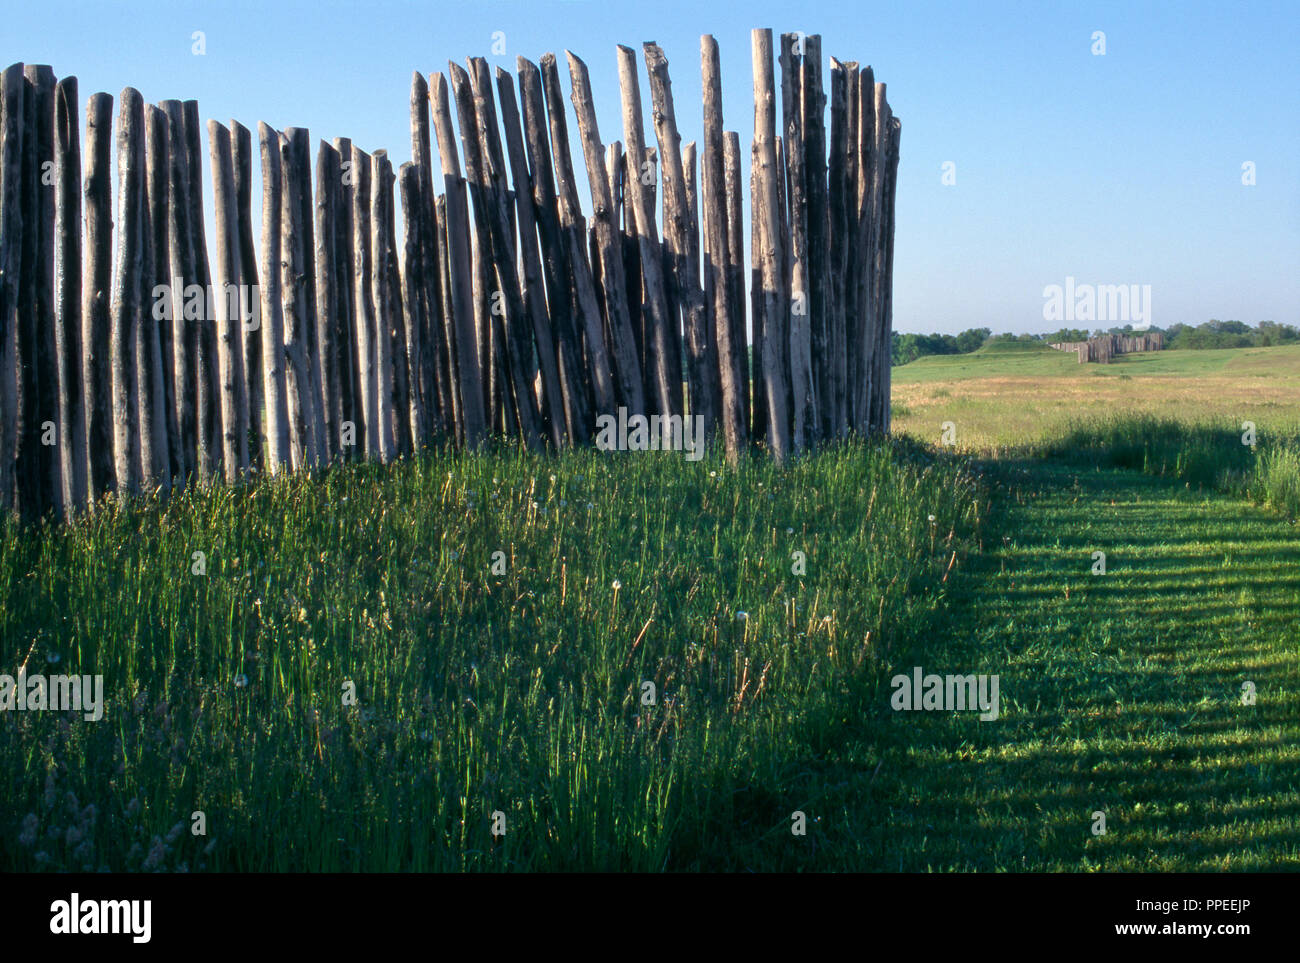 Aztalan State Park, Middle Mississippian Moundbuilder site in Wisconsin, mound & part of village stockade. Photograph Stock Photo